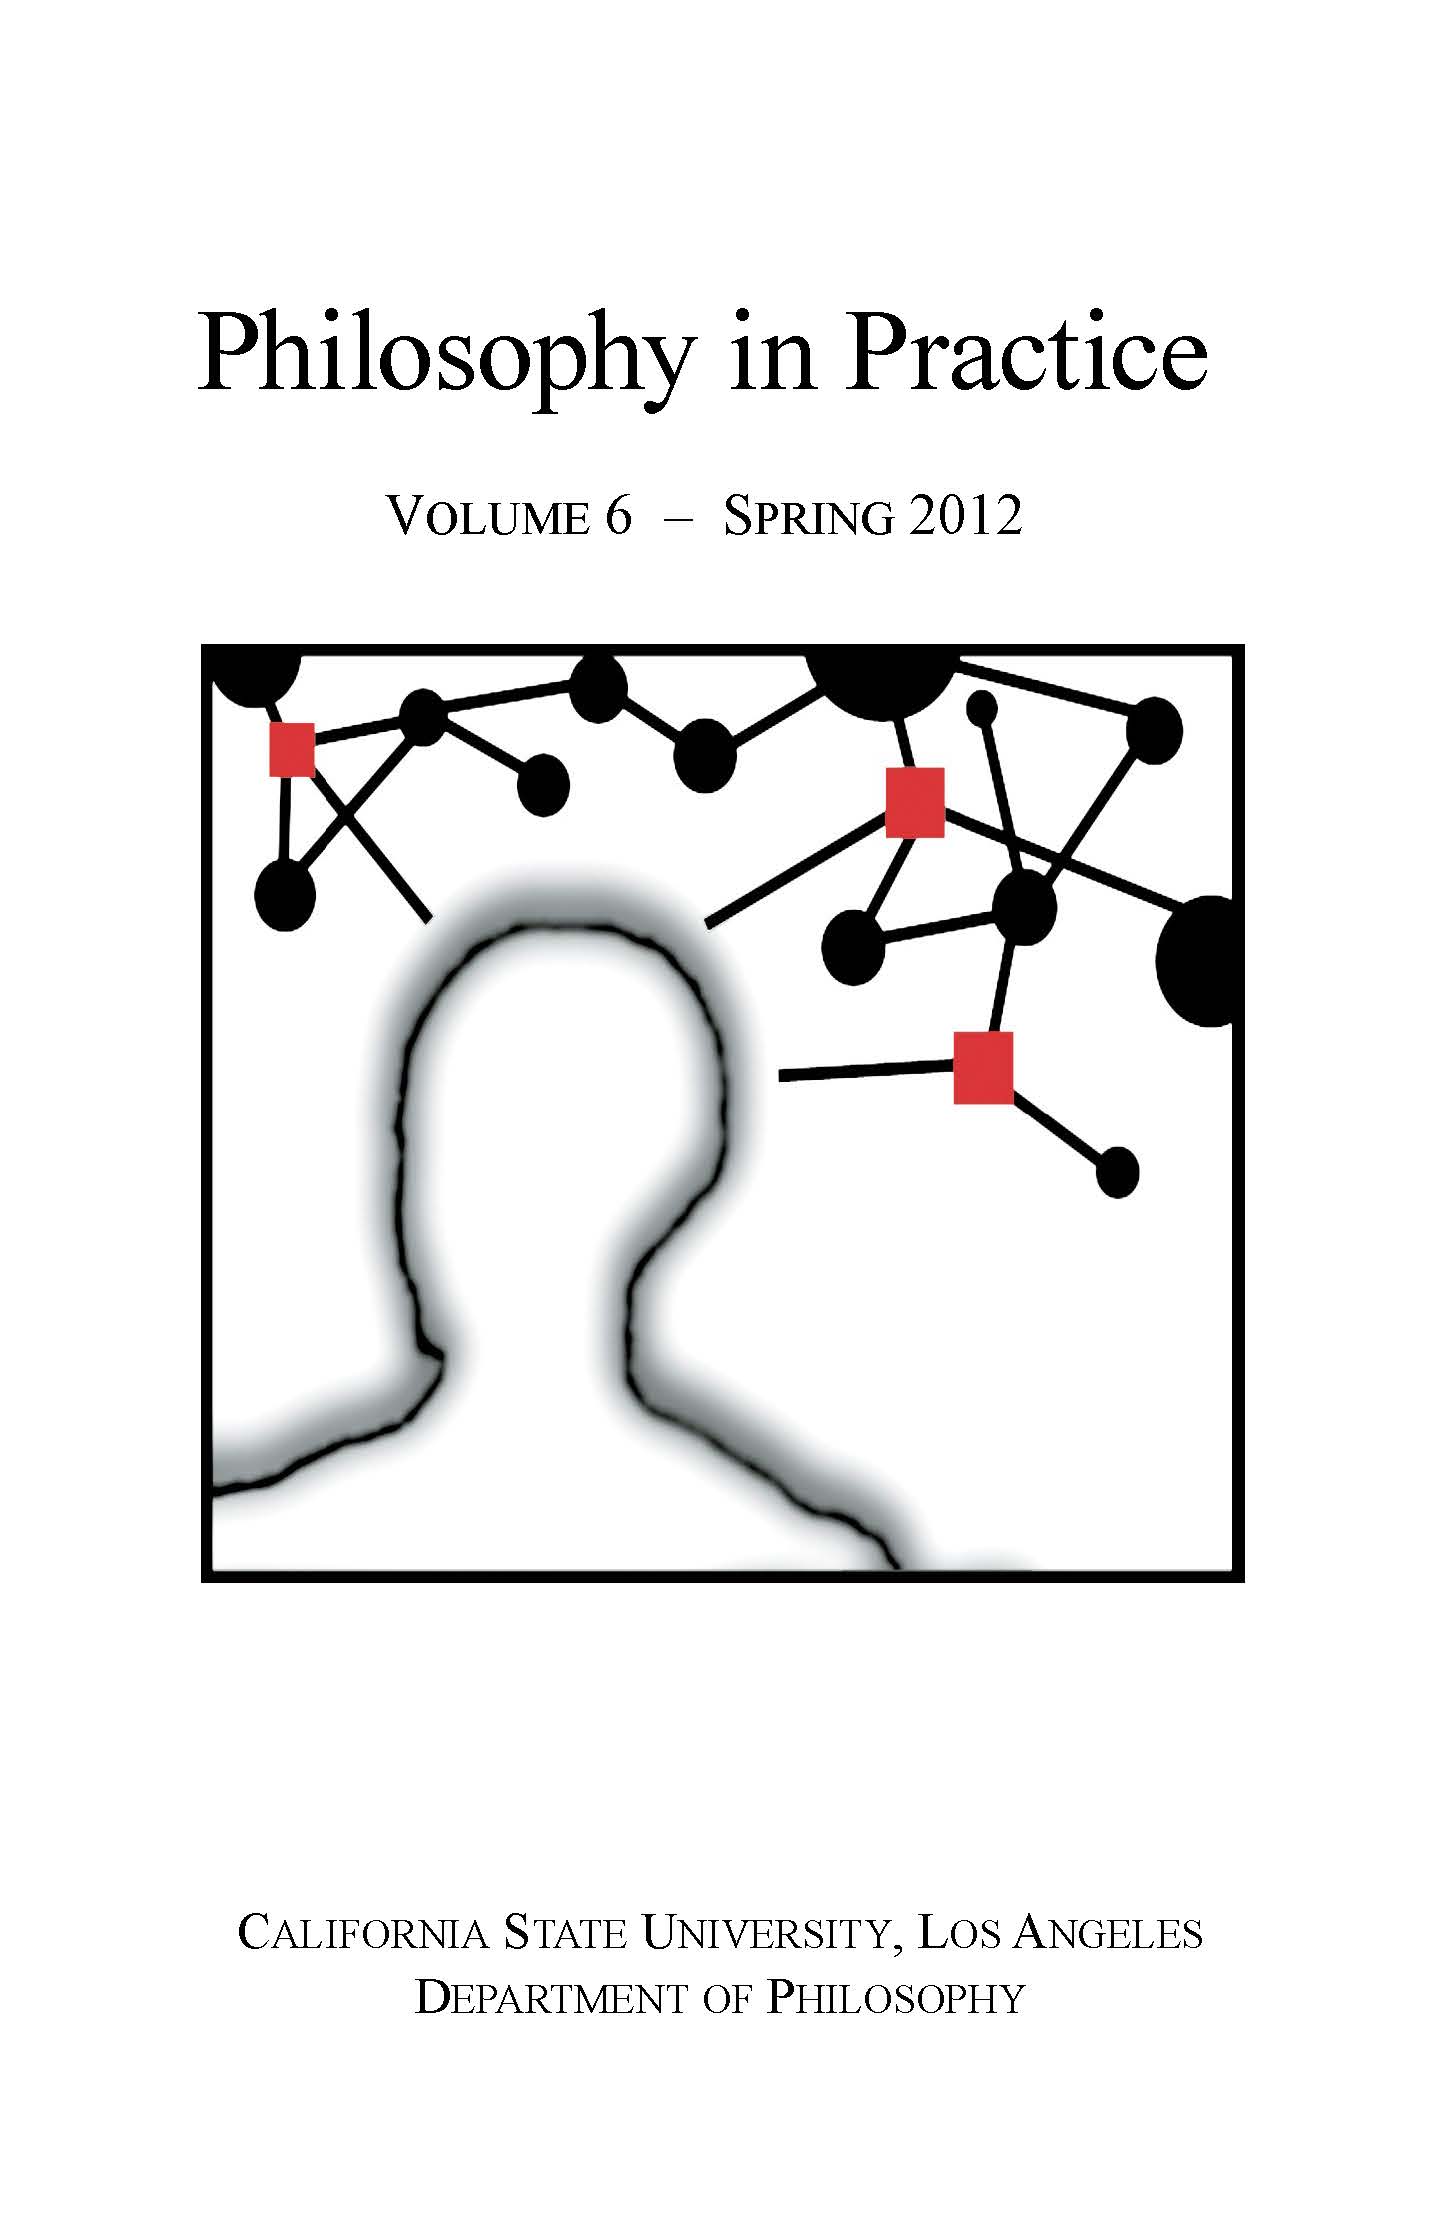 Philosophy in Practice Cover volume 6